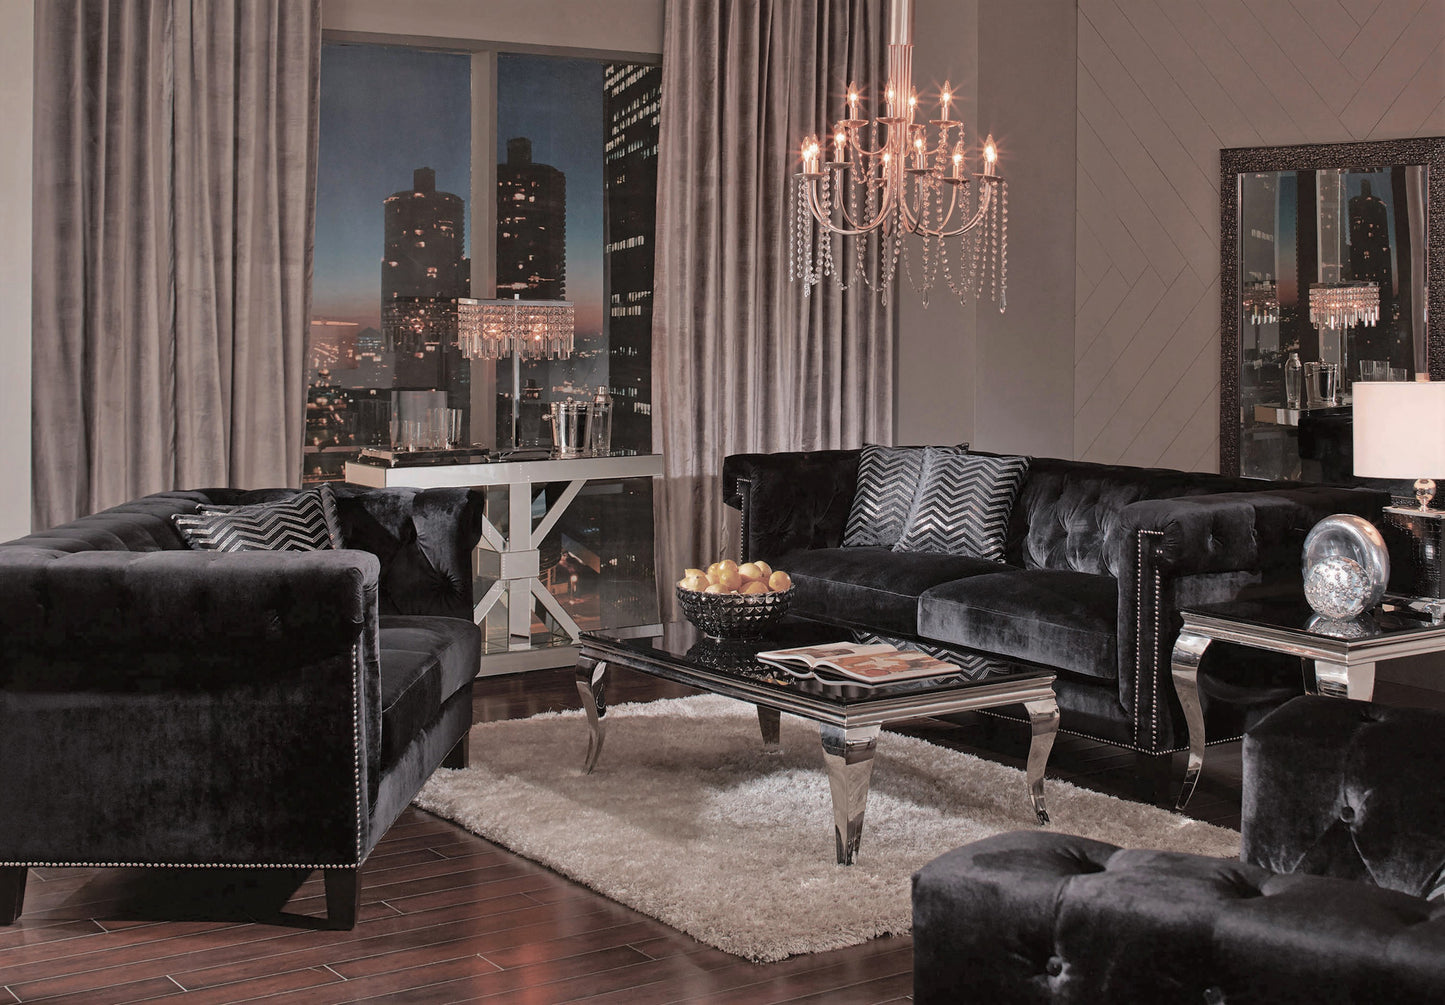 Reventlow Black Velvet Sofa Collection - Coaster Furniture